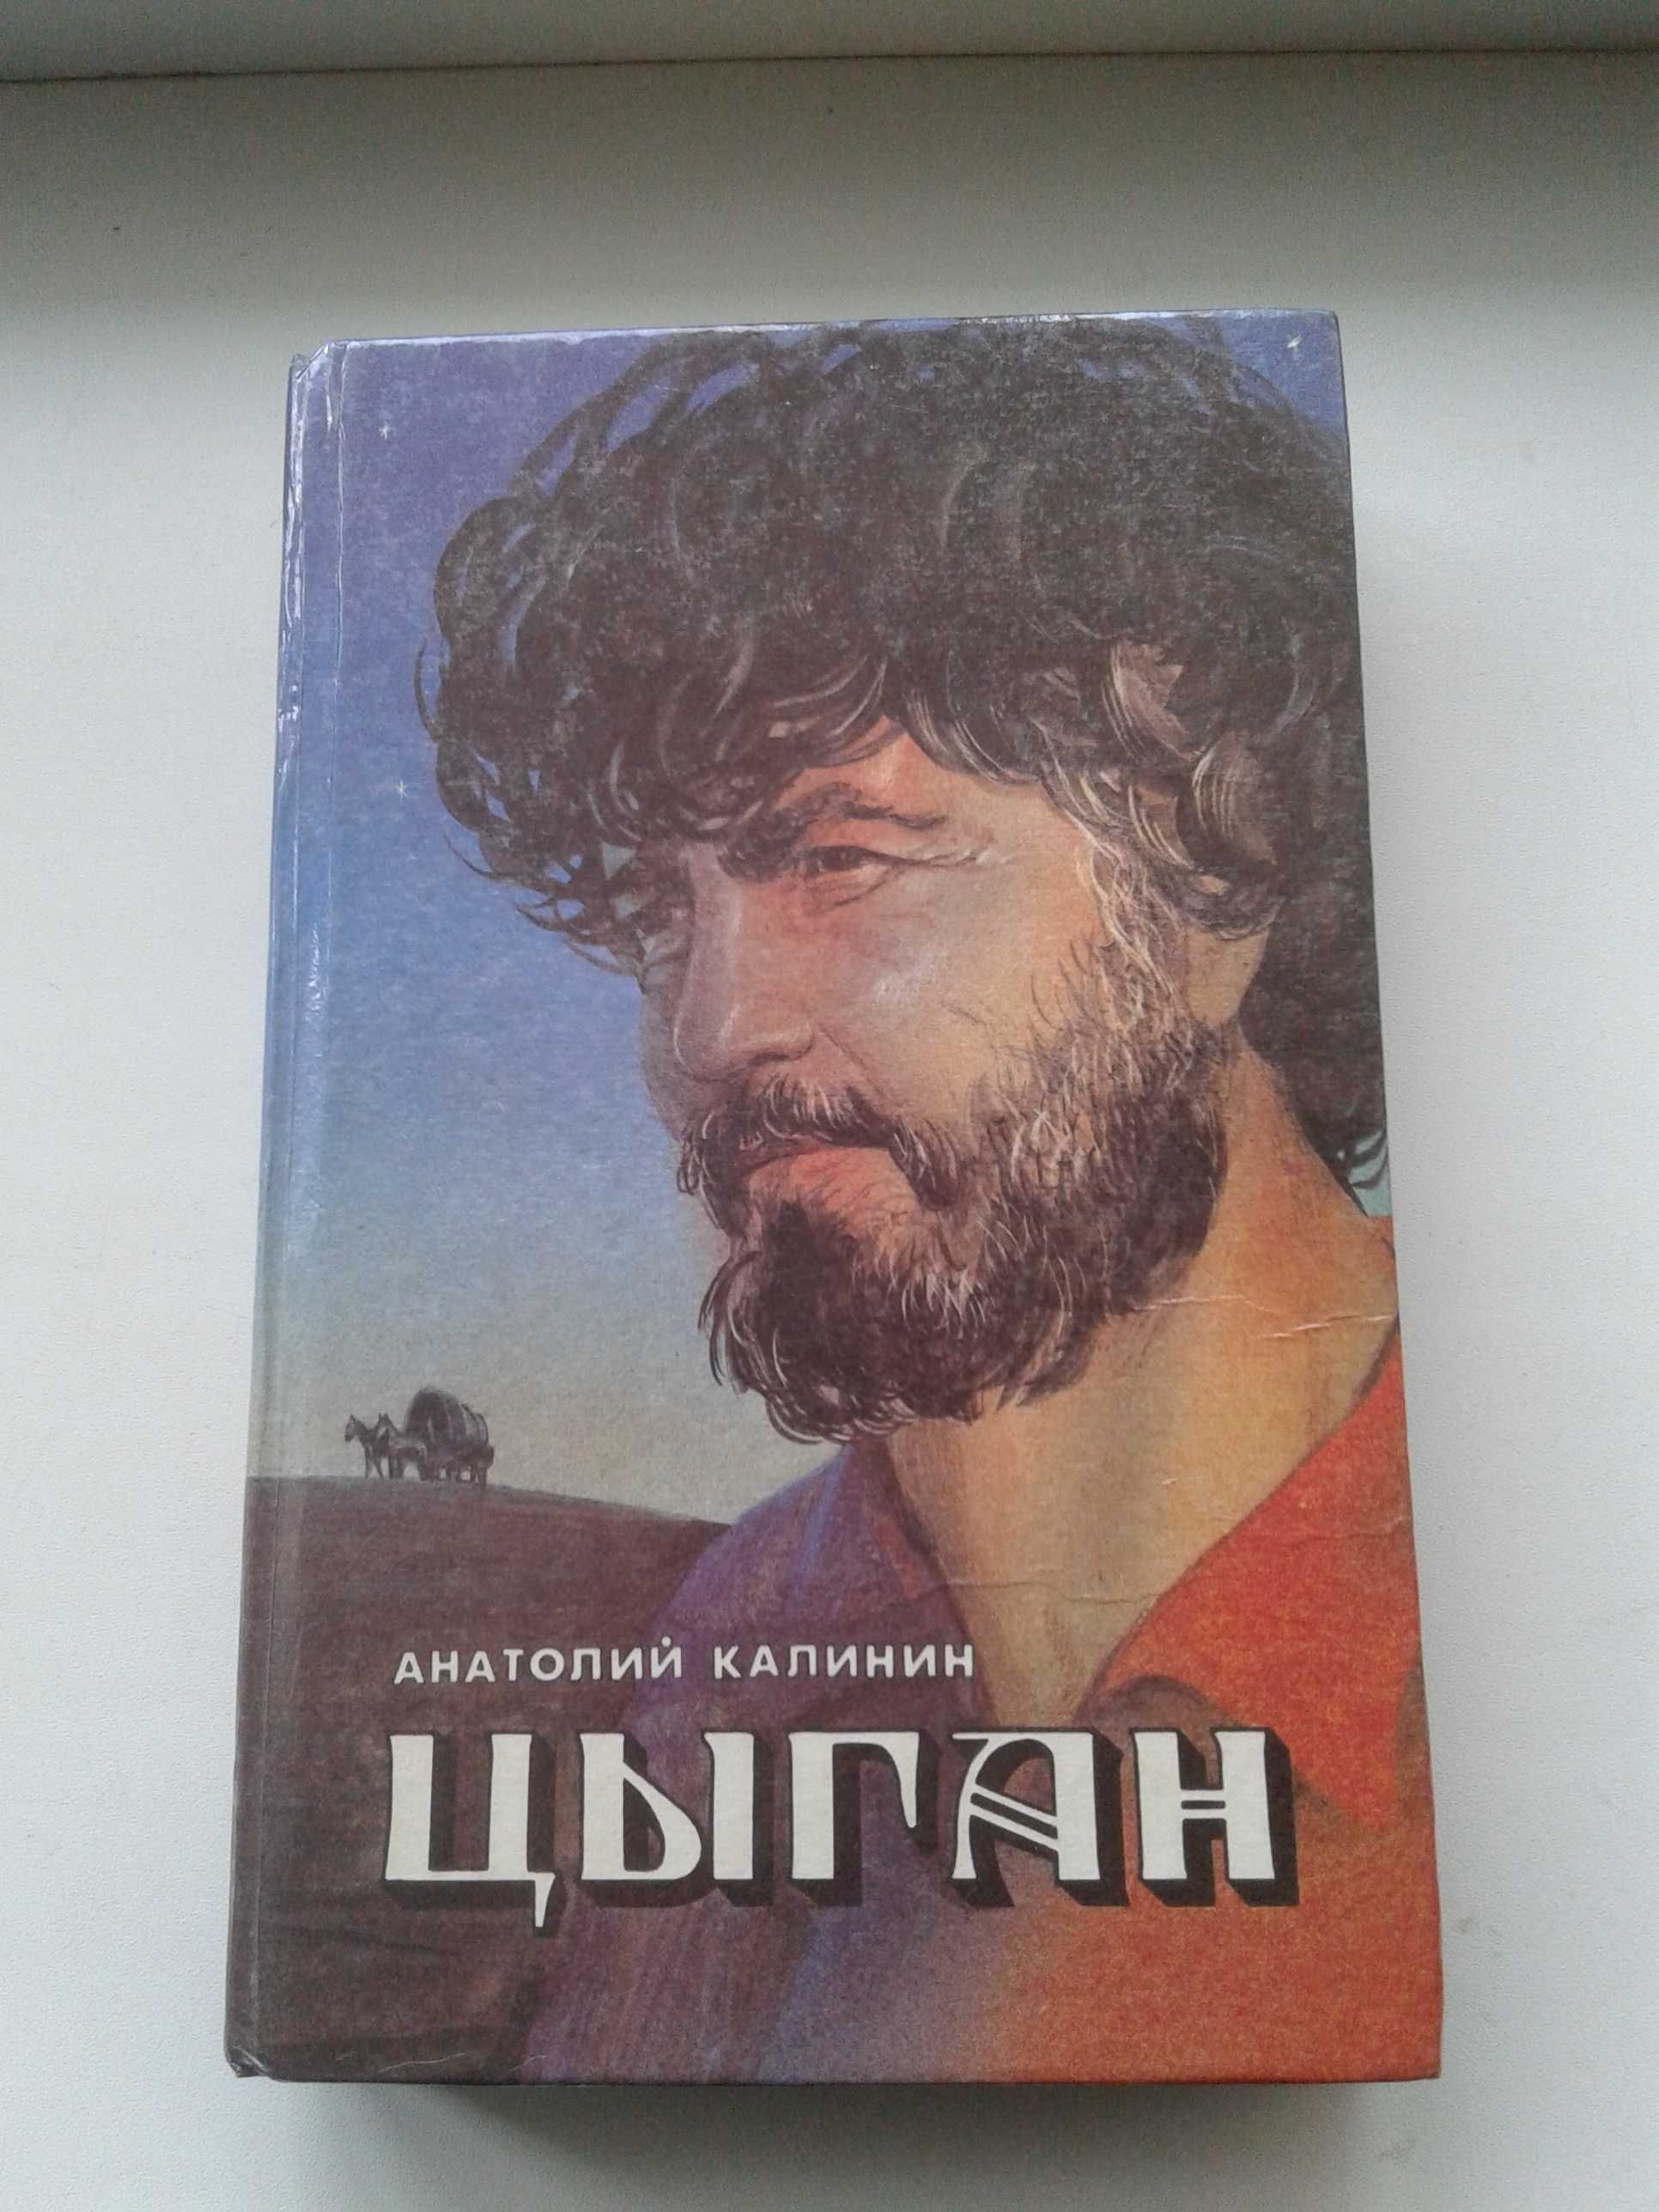 Книга роман "Цыган" Анатолий Калинин 1993 г